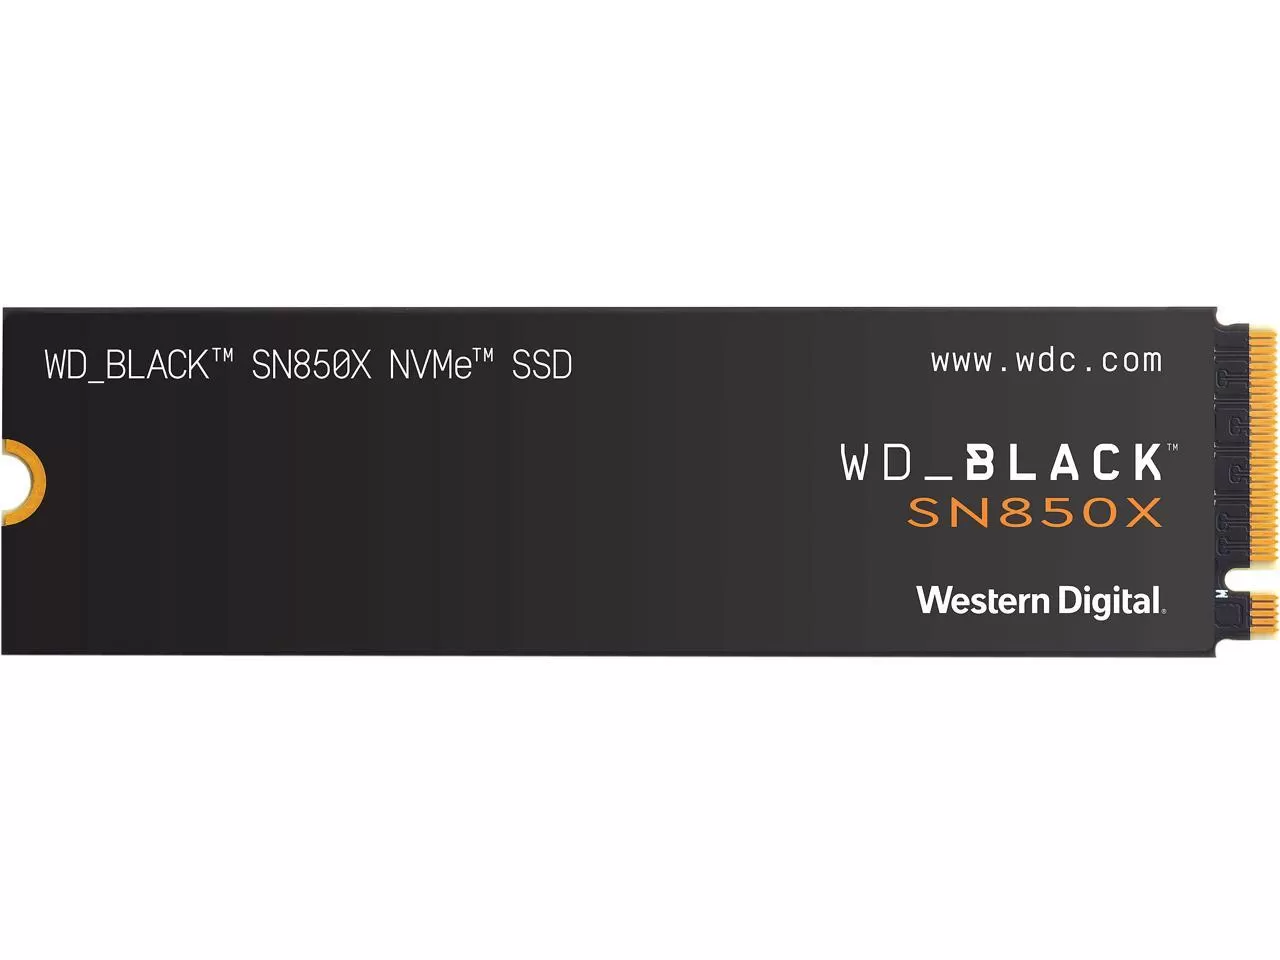 Hard disk ssd western digital wd black sn850x 1tb m.2 2280